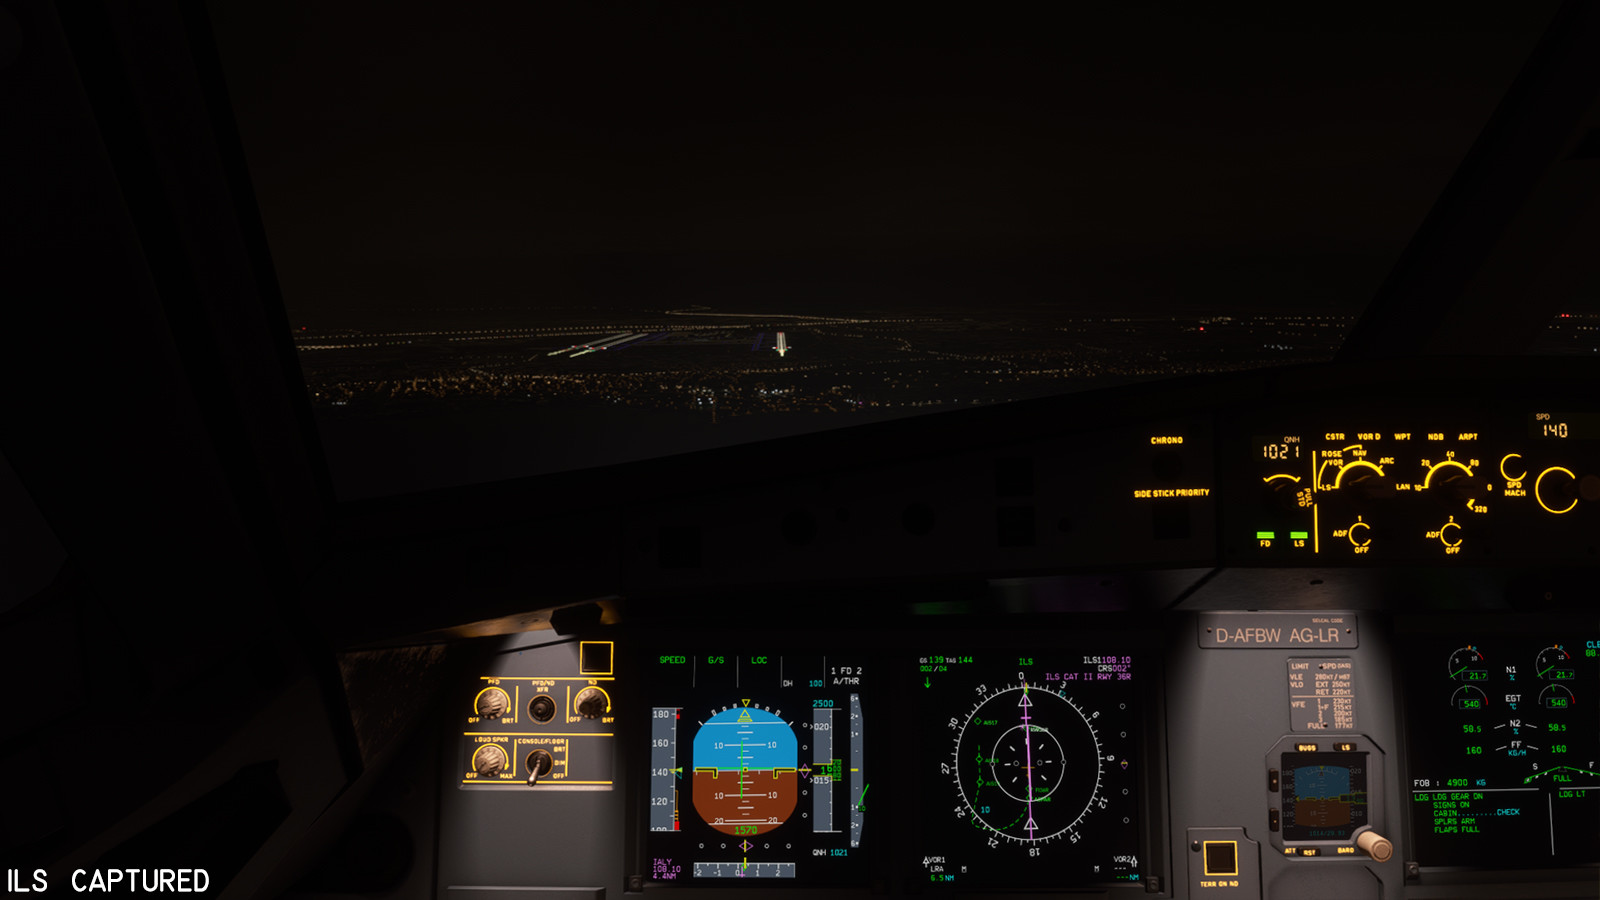 Mfs 2020 купить. Microsoft Flight Simulator (2020). Флайт симулятор 2020. Microsoft Flight Simulator 2020 Новосибирск. Microsoft Flight Simulator 2020 Helicopter.